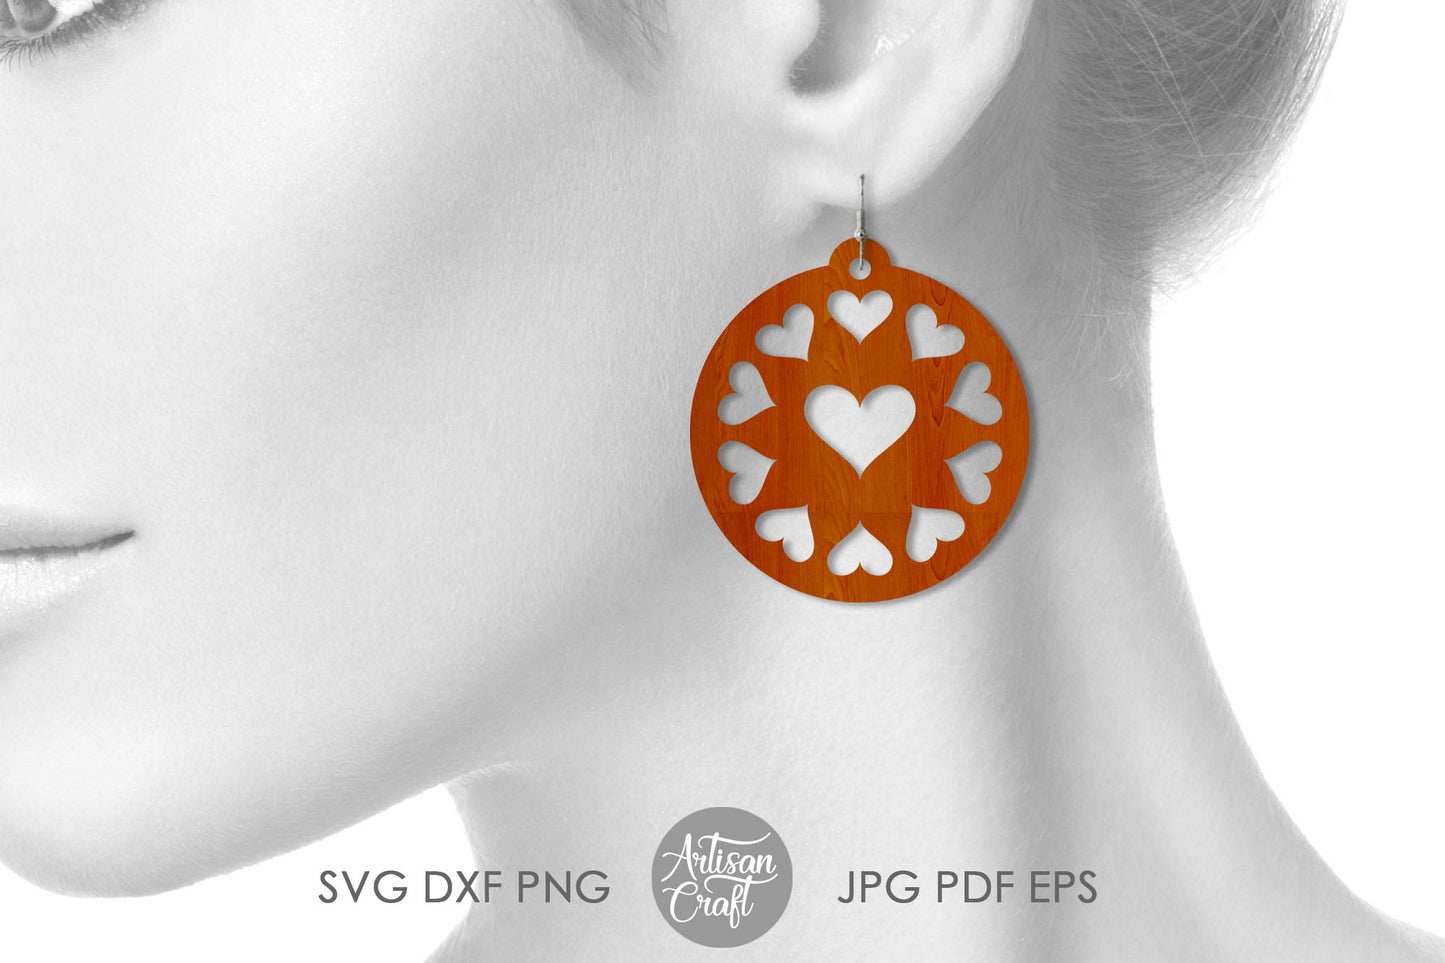 Heart earrings SVG for laser cutting